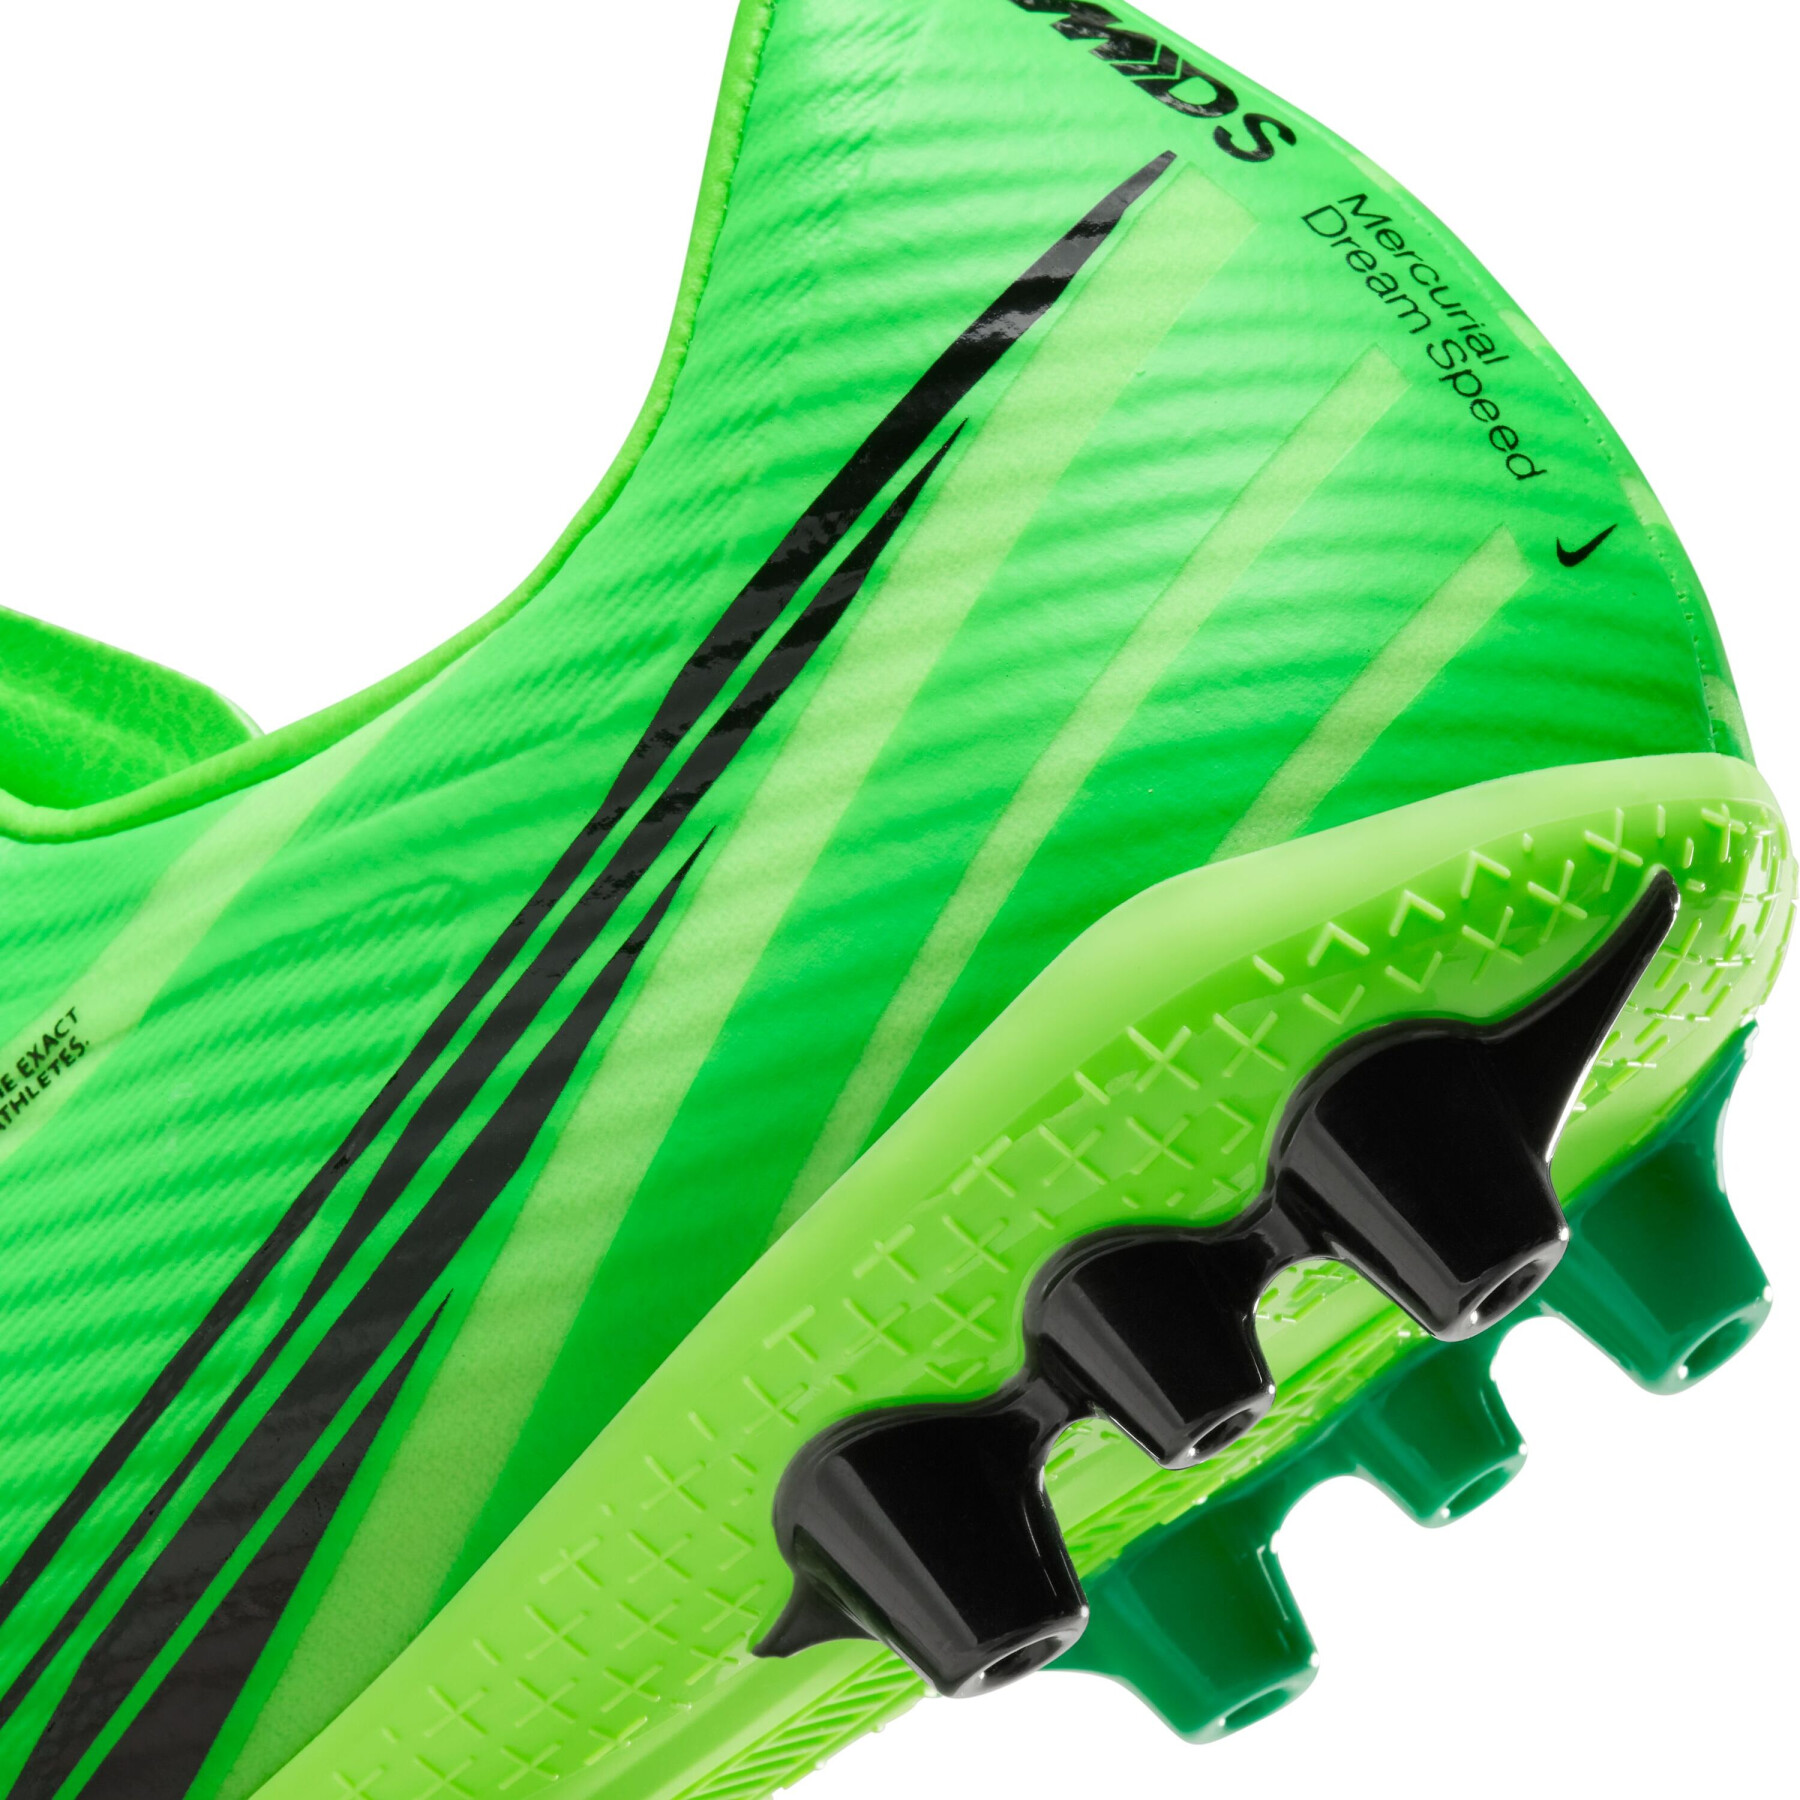 Soccer shoes Nike Vapor 15 Academy Mercurial Dream Speed AG